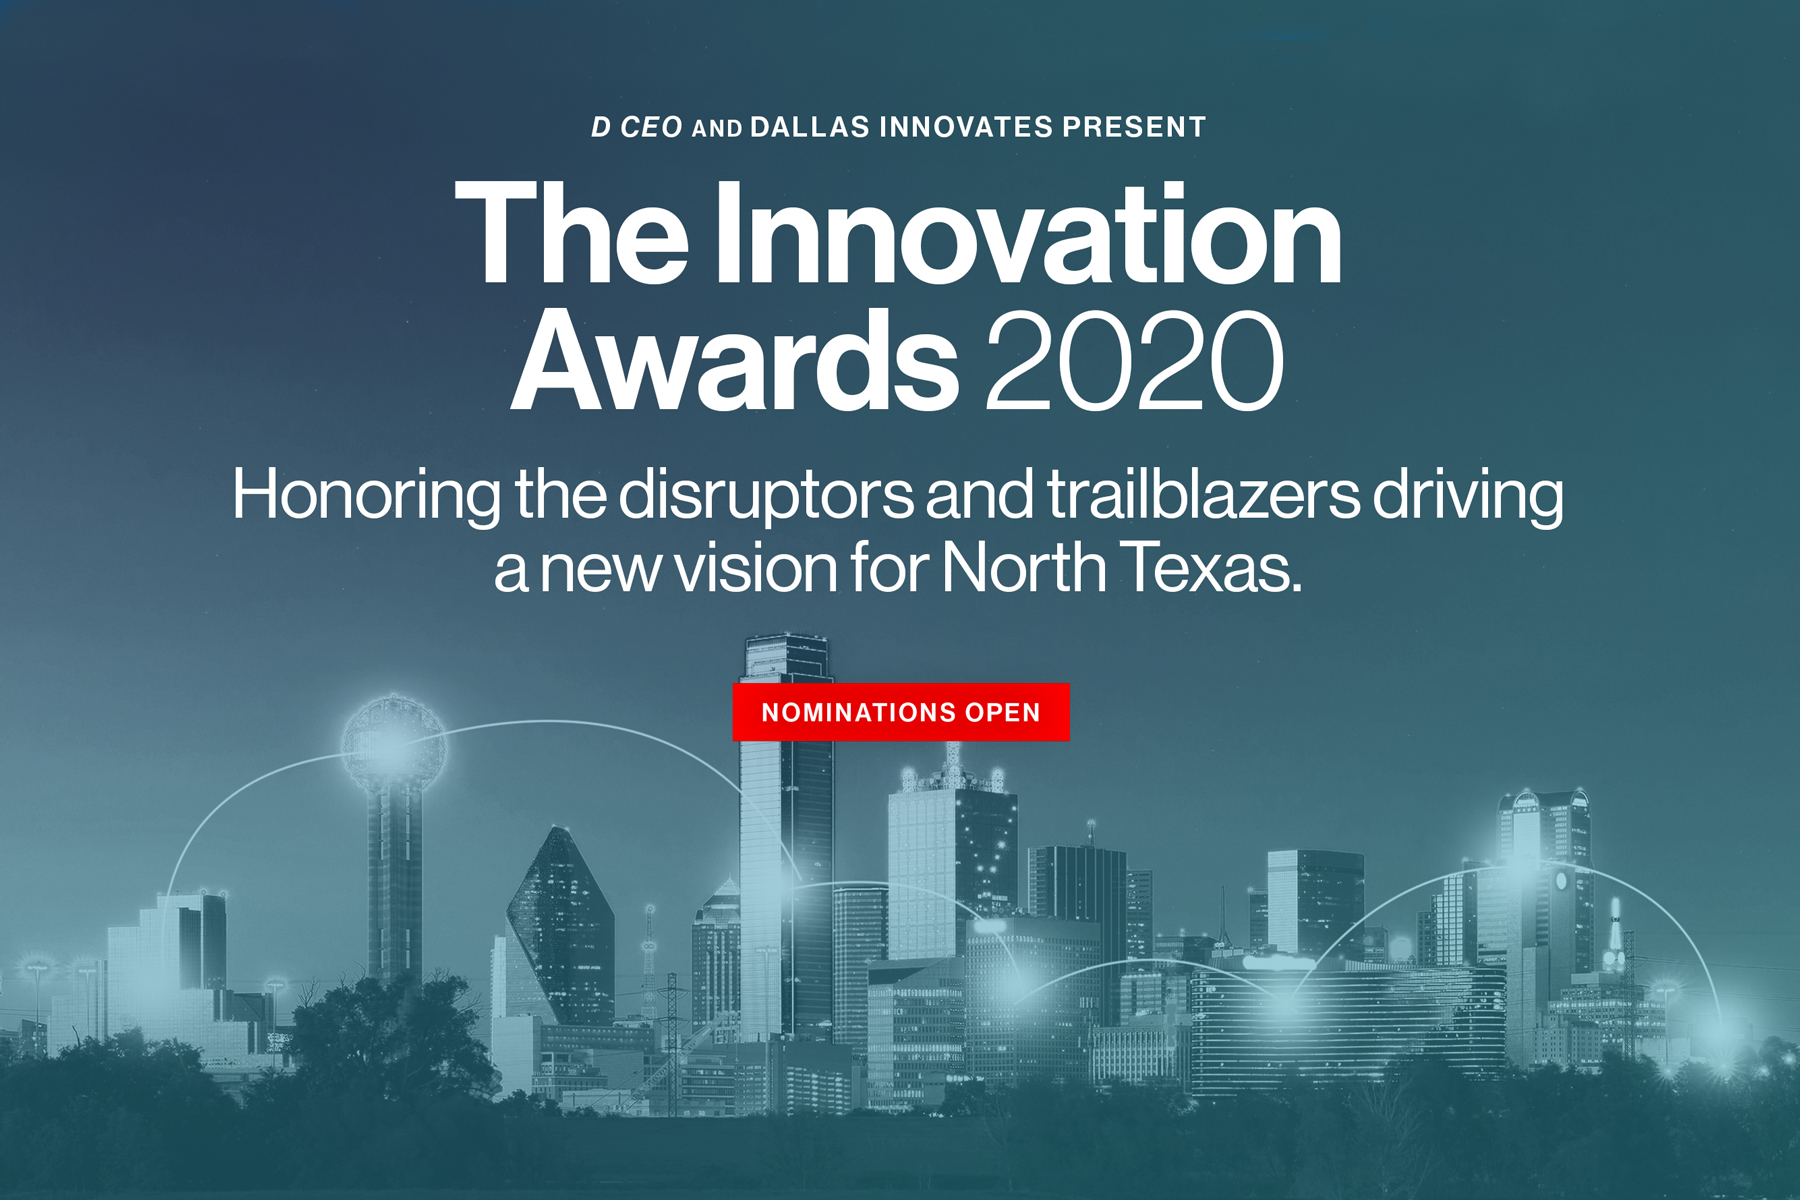 Innovation award nominations are open